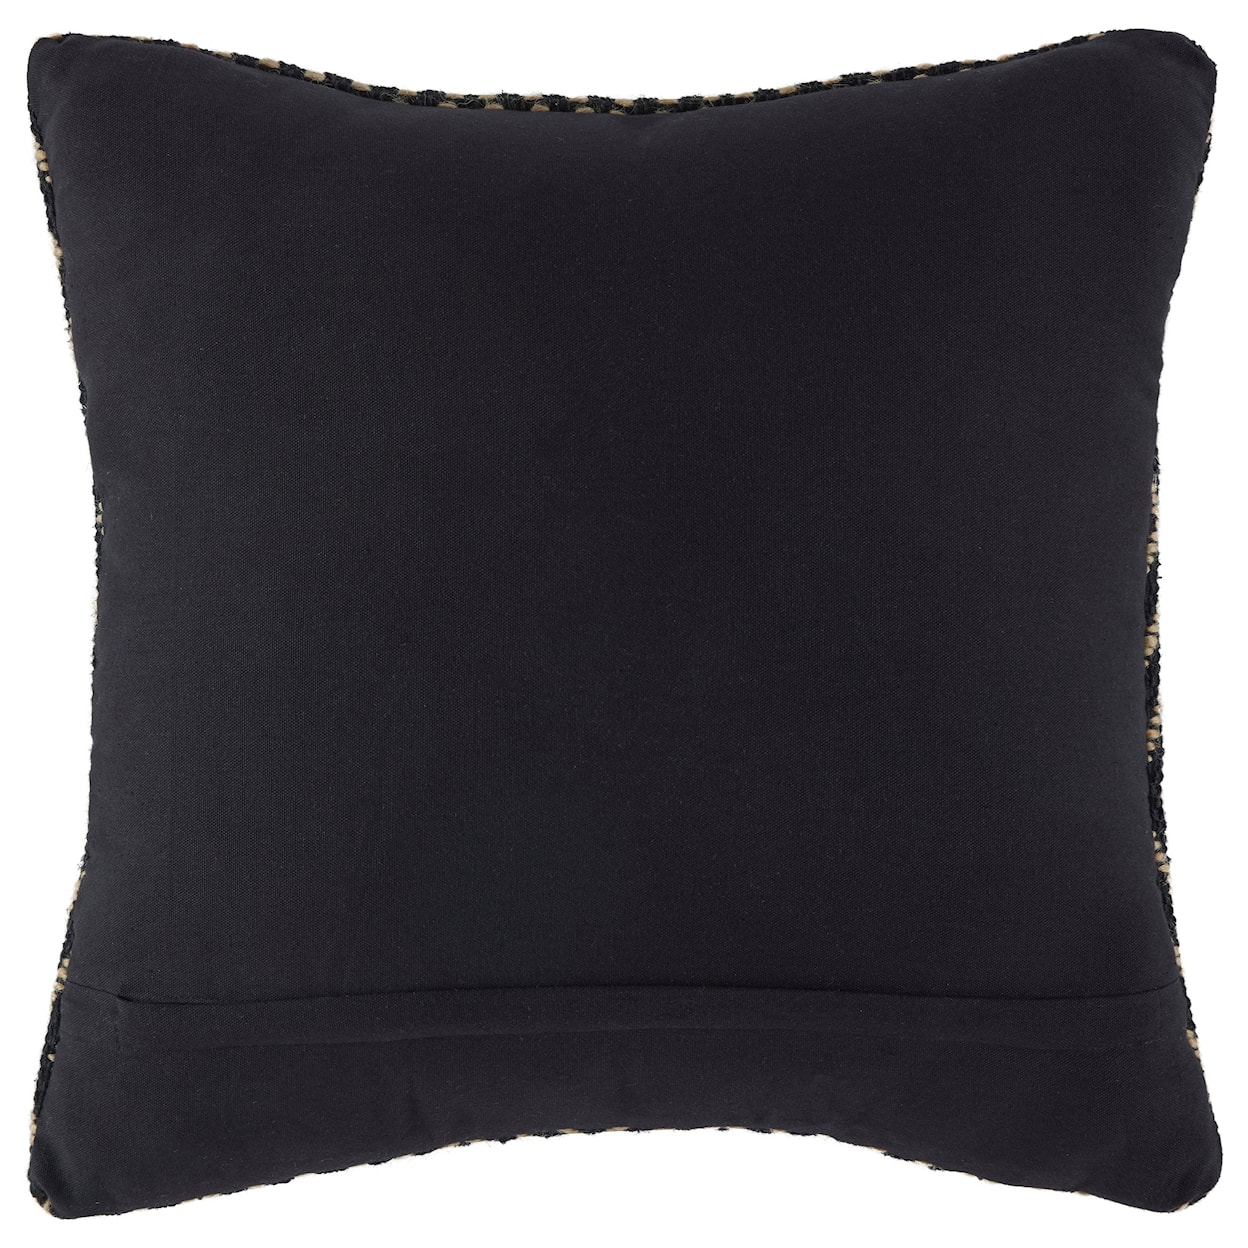 Ashley Furniture Signature Design Pillows Mitt Black/Tan Pillow